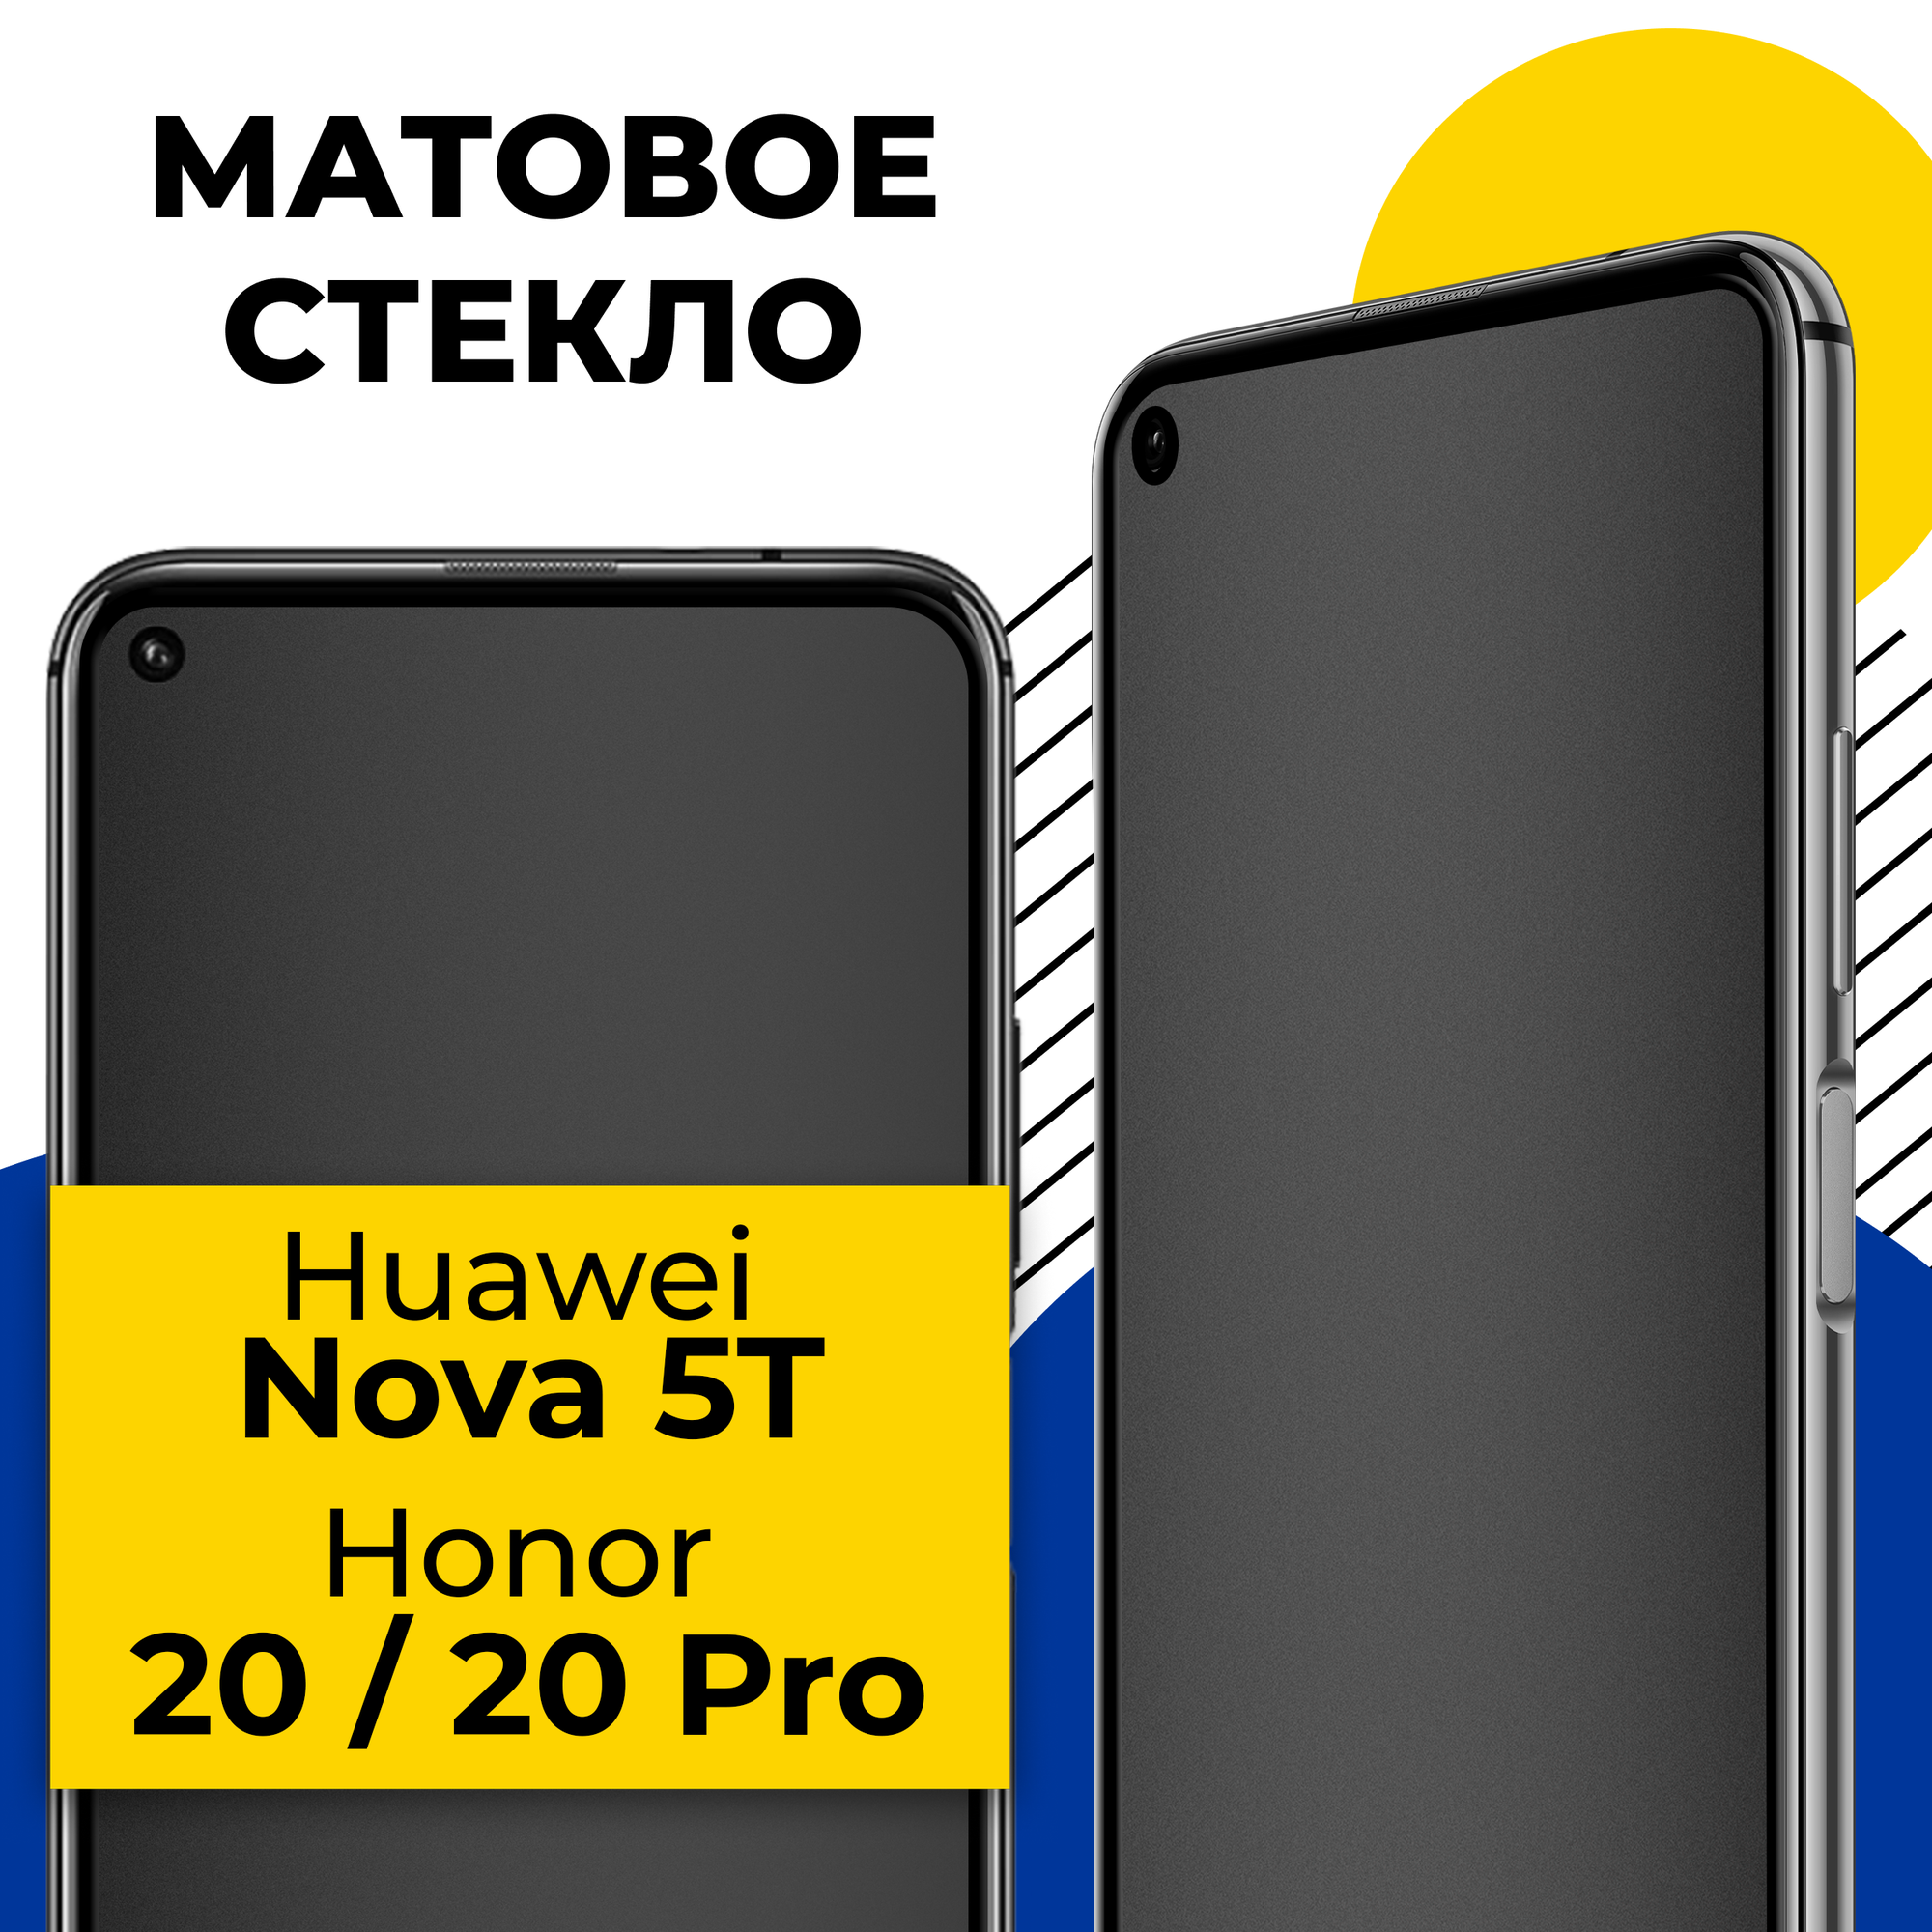 Матовое защитное стекло для телефона Honor 20 20 Pro и Huawei Nova 5T / Противоударное стекло 2.5D на смартфон Хонор 20 20 Про и Хуавей Нова 5Т